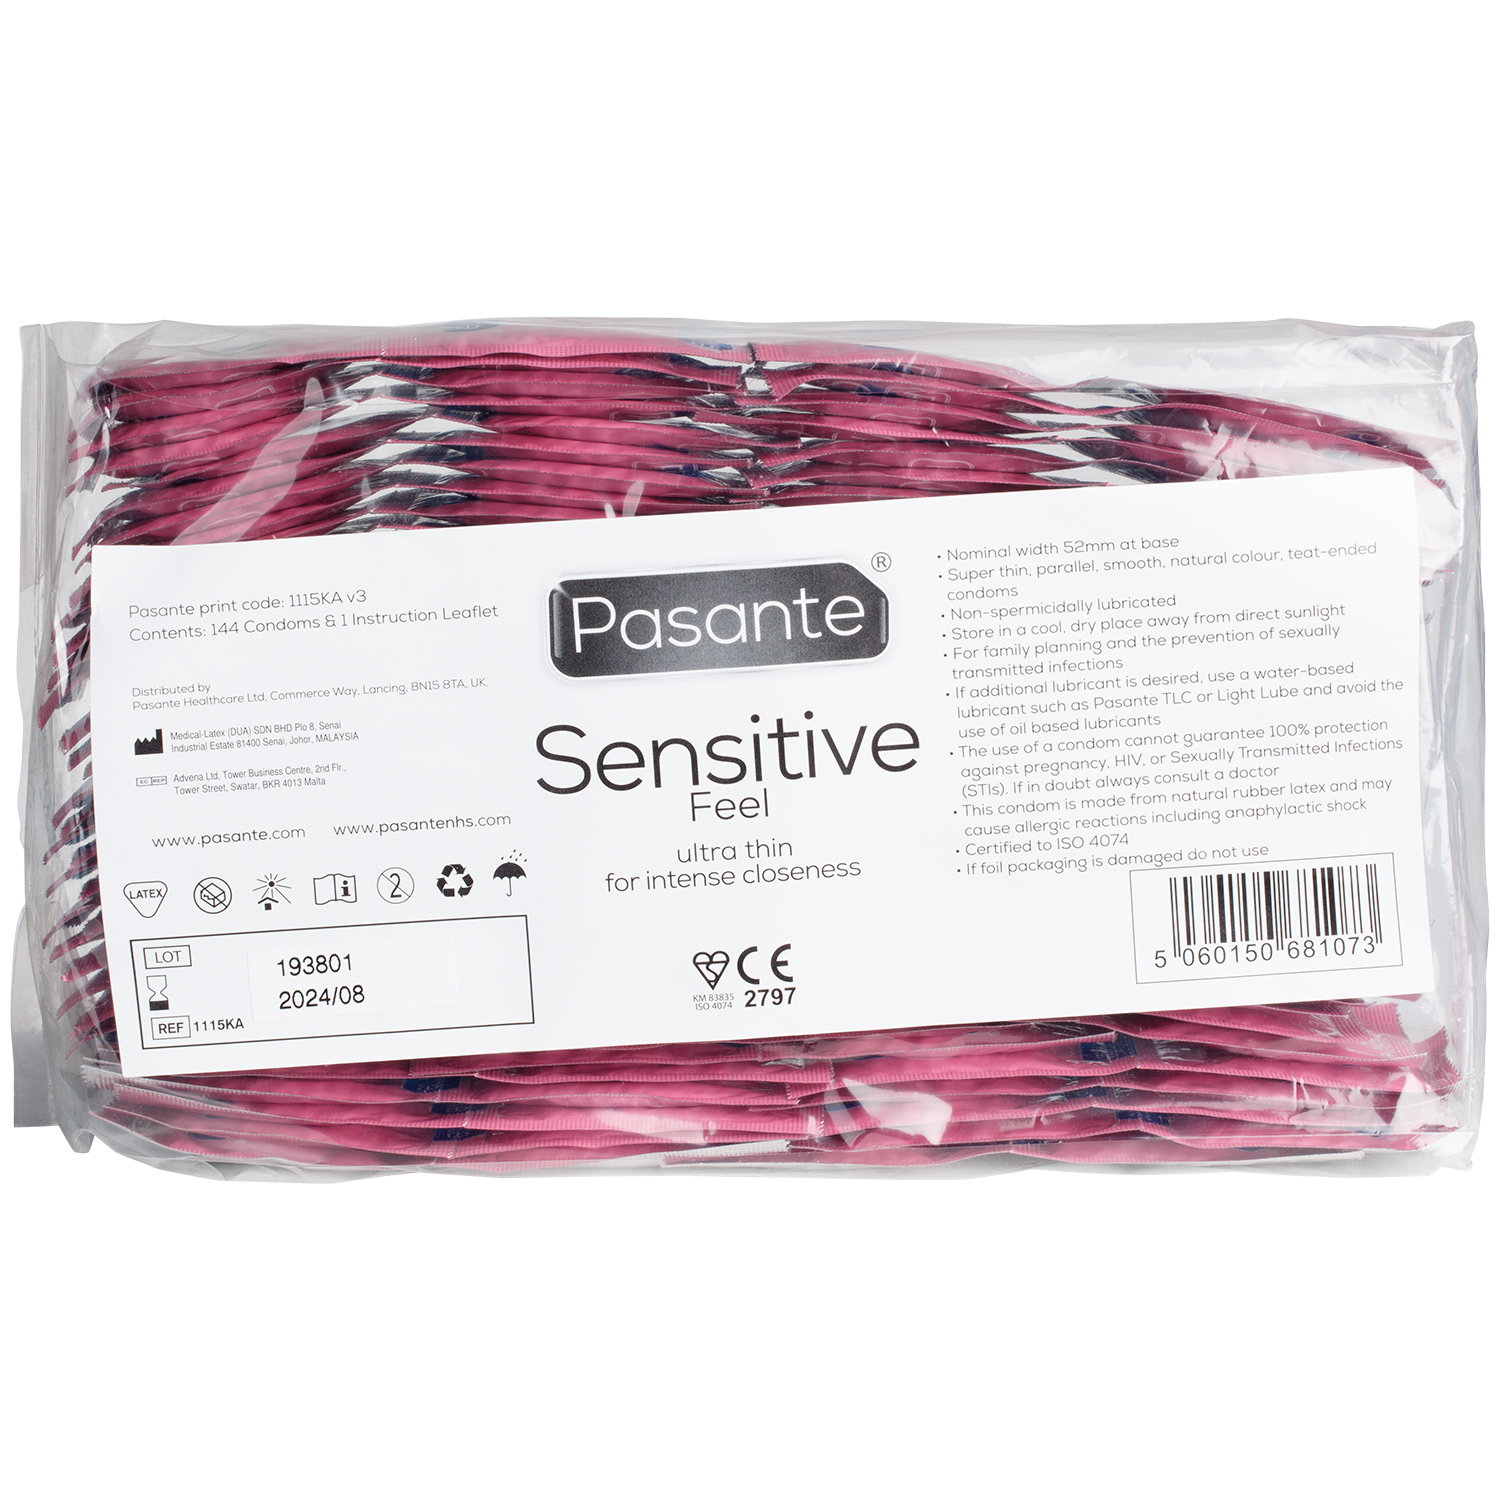 Pasante Sensitive Feel Ultra Thin Kondomer 144 st - Pasante